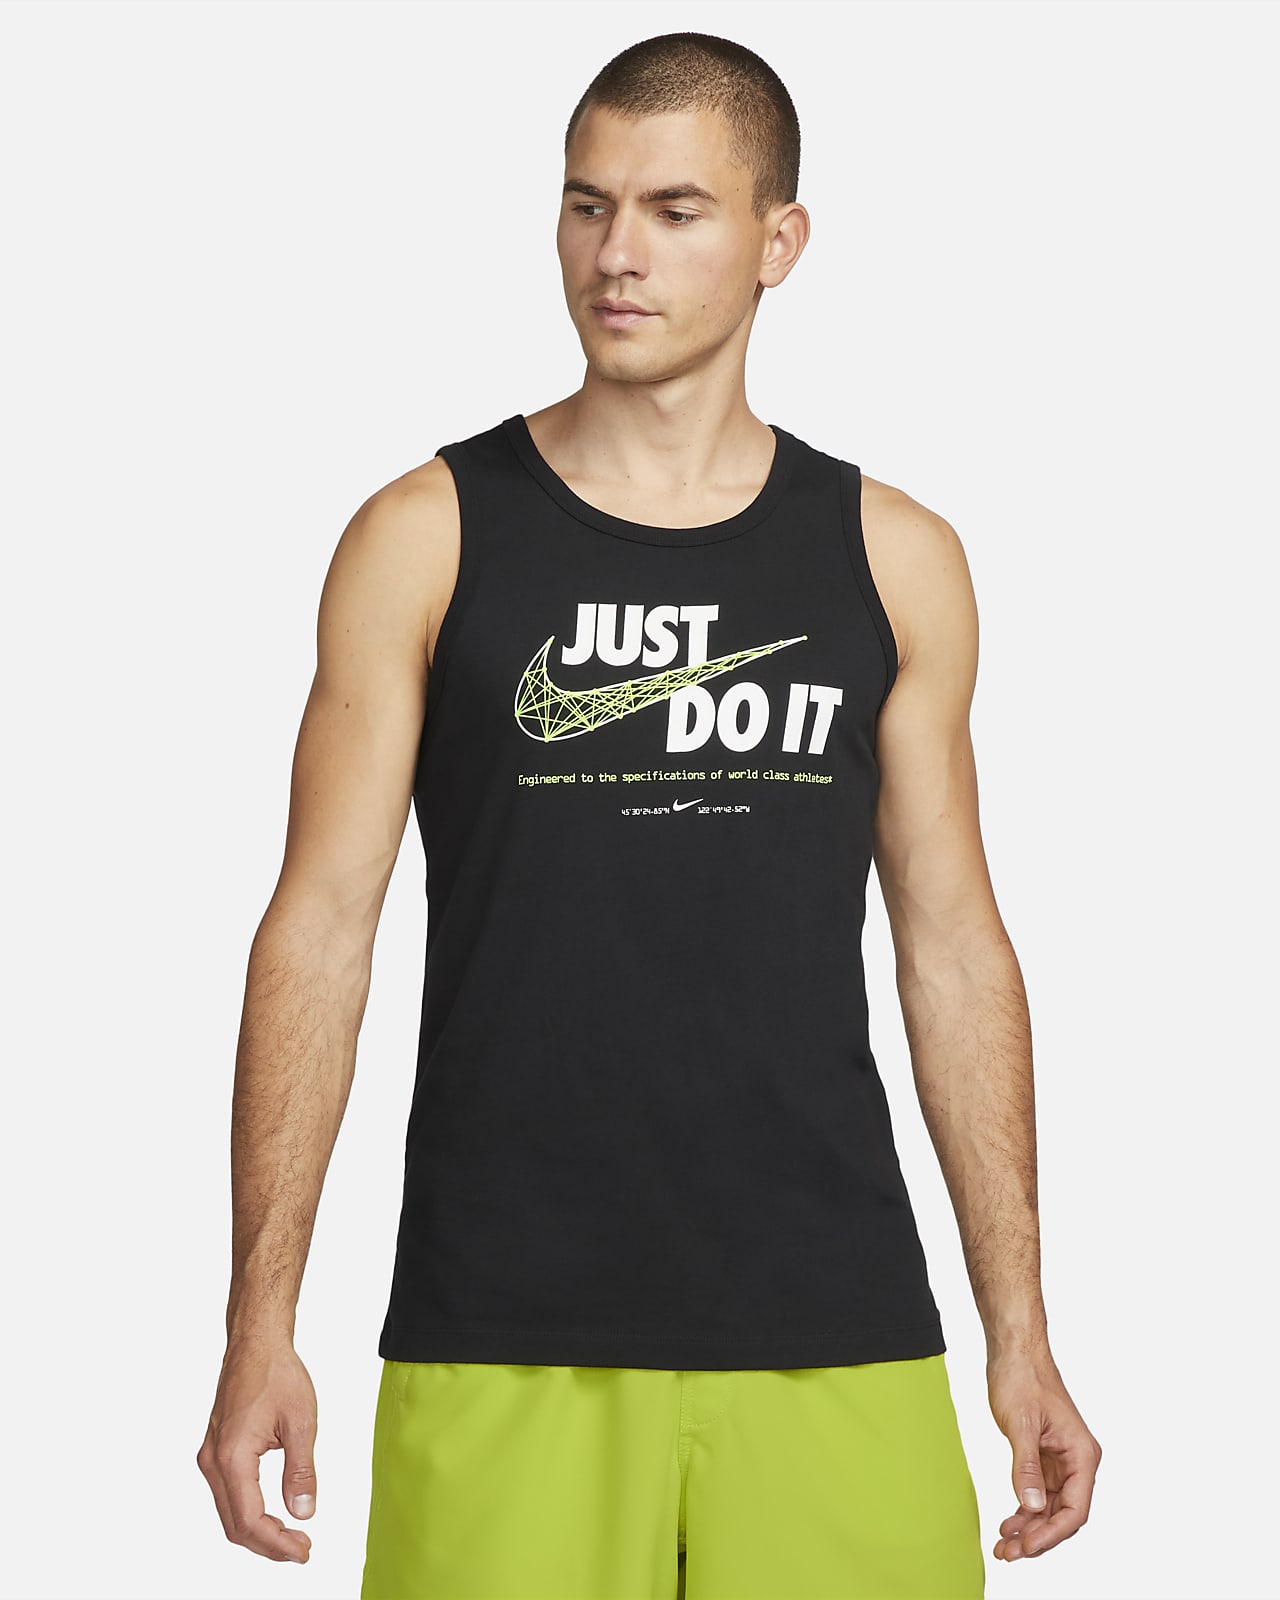 Mens Basketball Tank Tops & Sleeveless Shirts. Nike JP